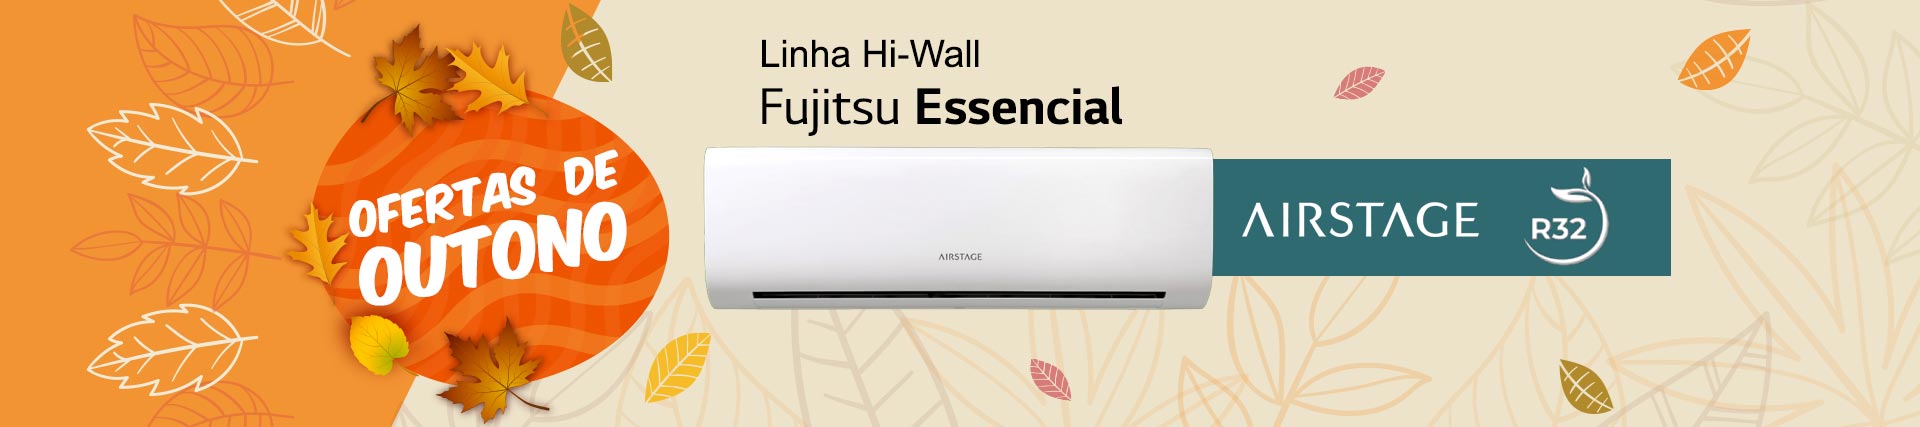 banner desktop Fujitsu Essencial Outono